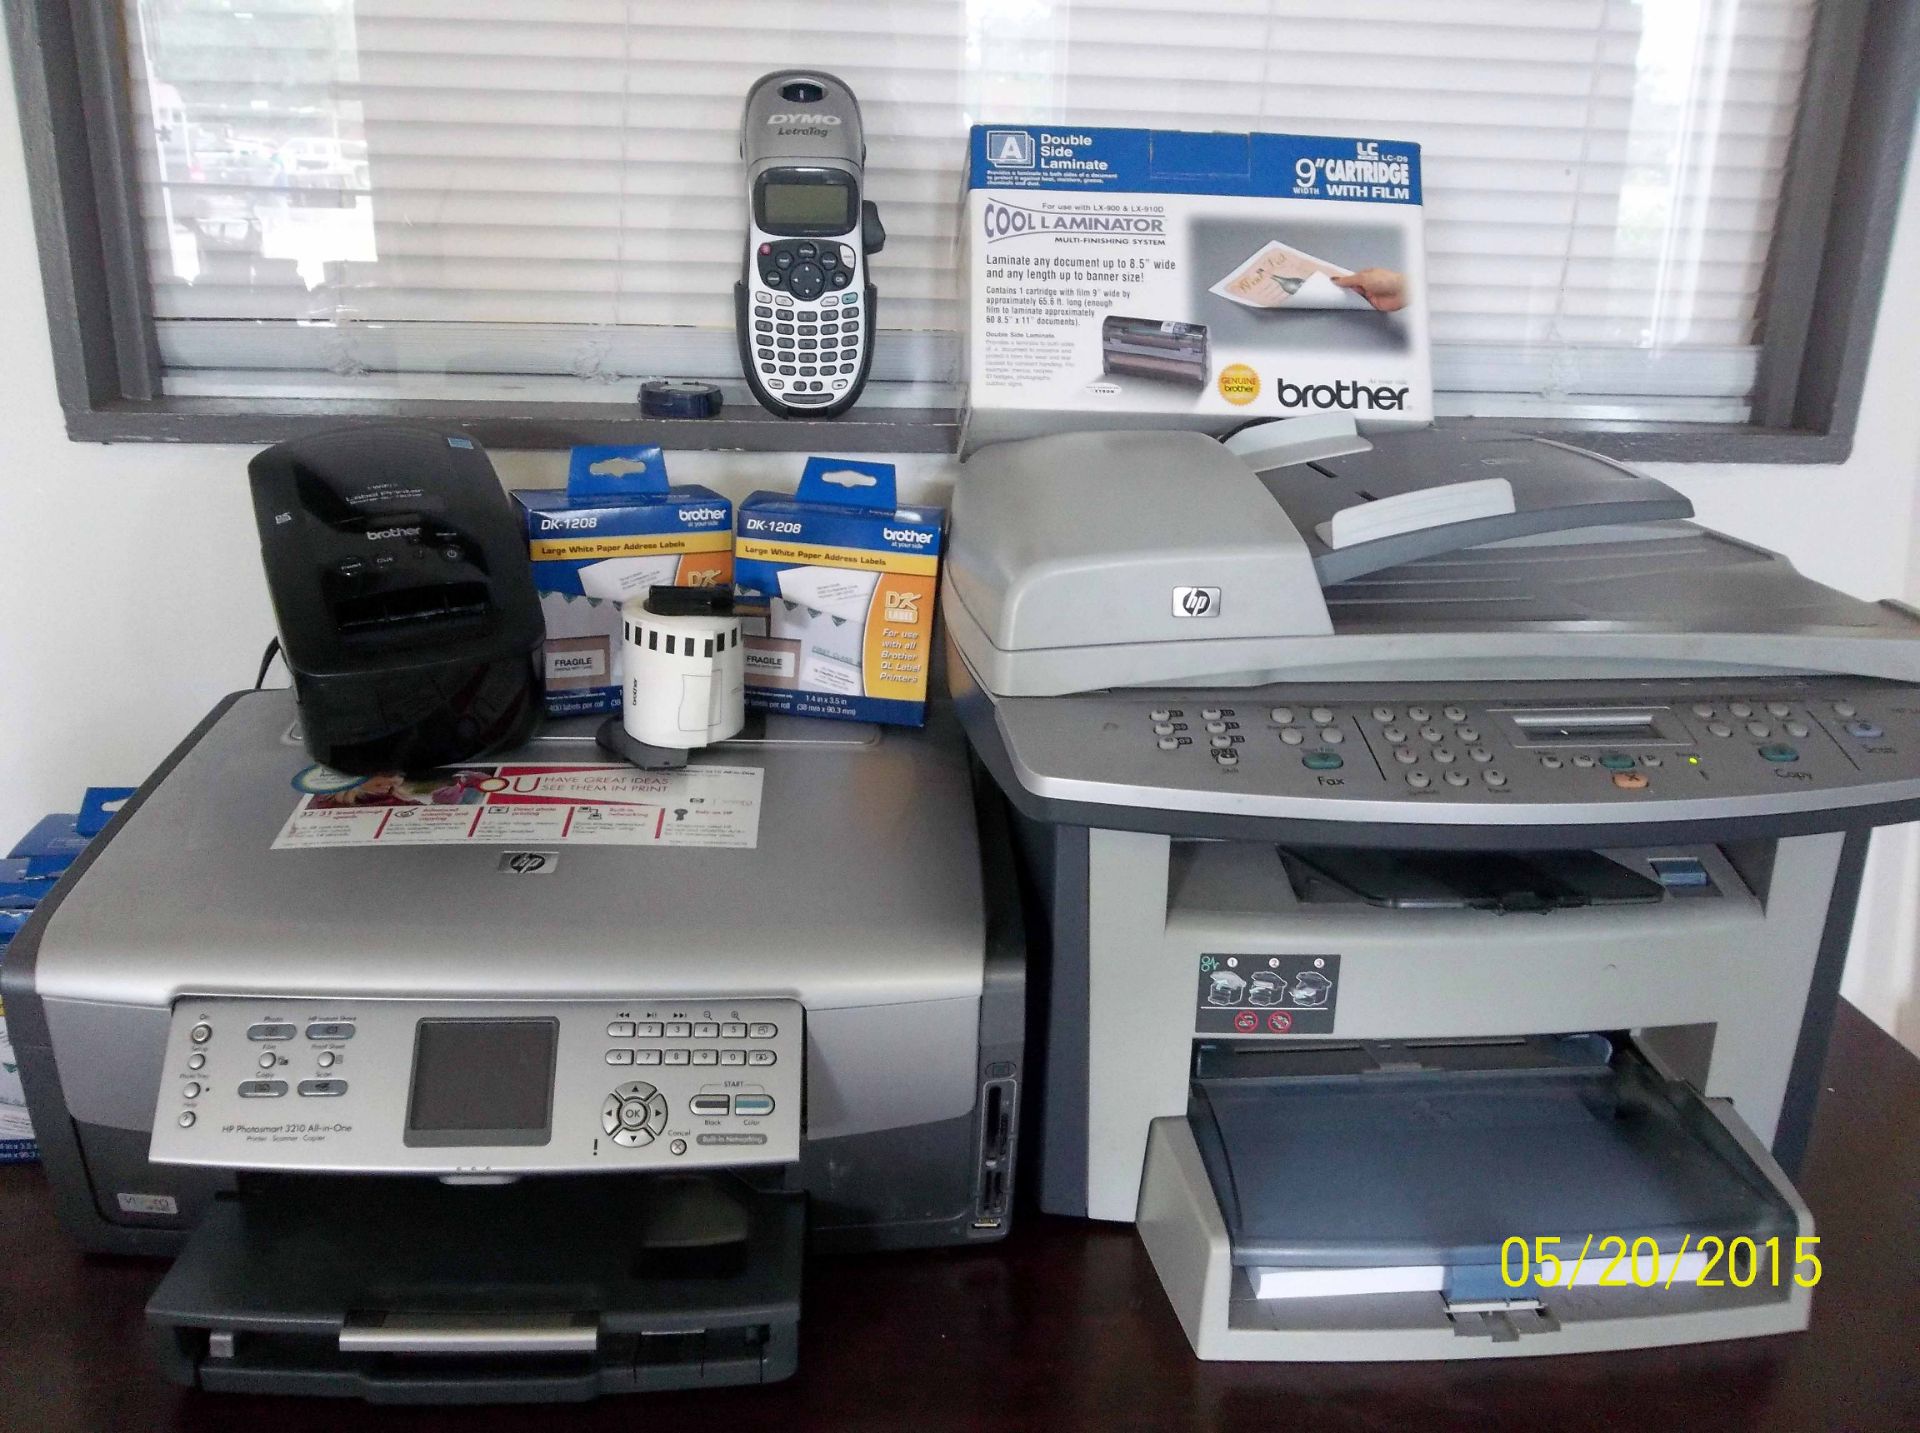 LOT OF OFFICE EQUIPMENT: Hewlett-Packard LaserJet 3055 all-in-one printer, Hewlett-Packard